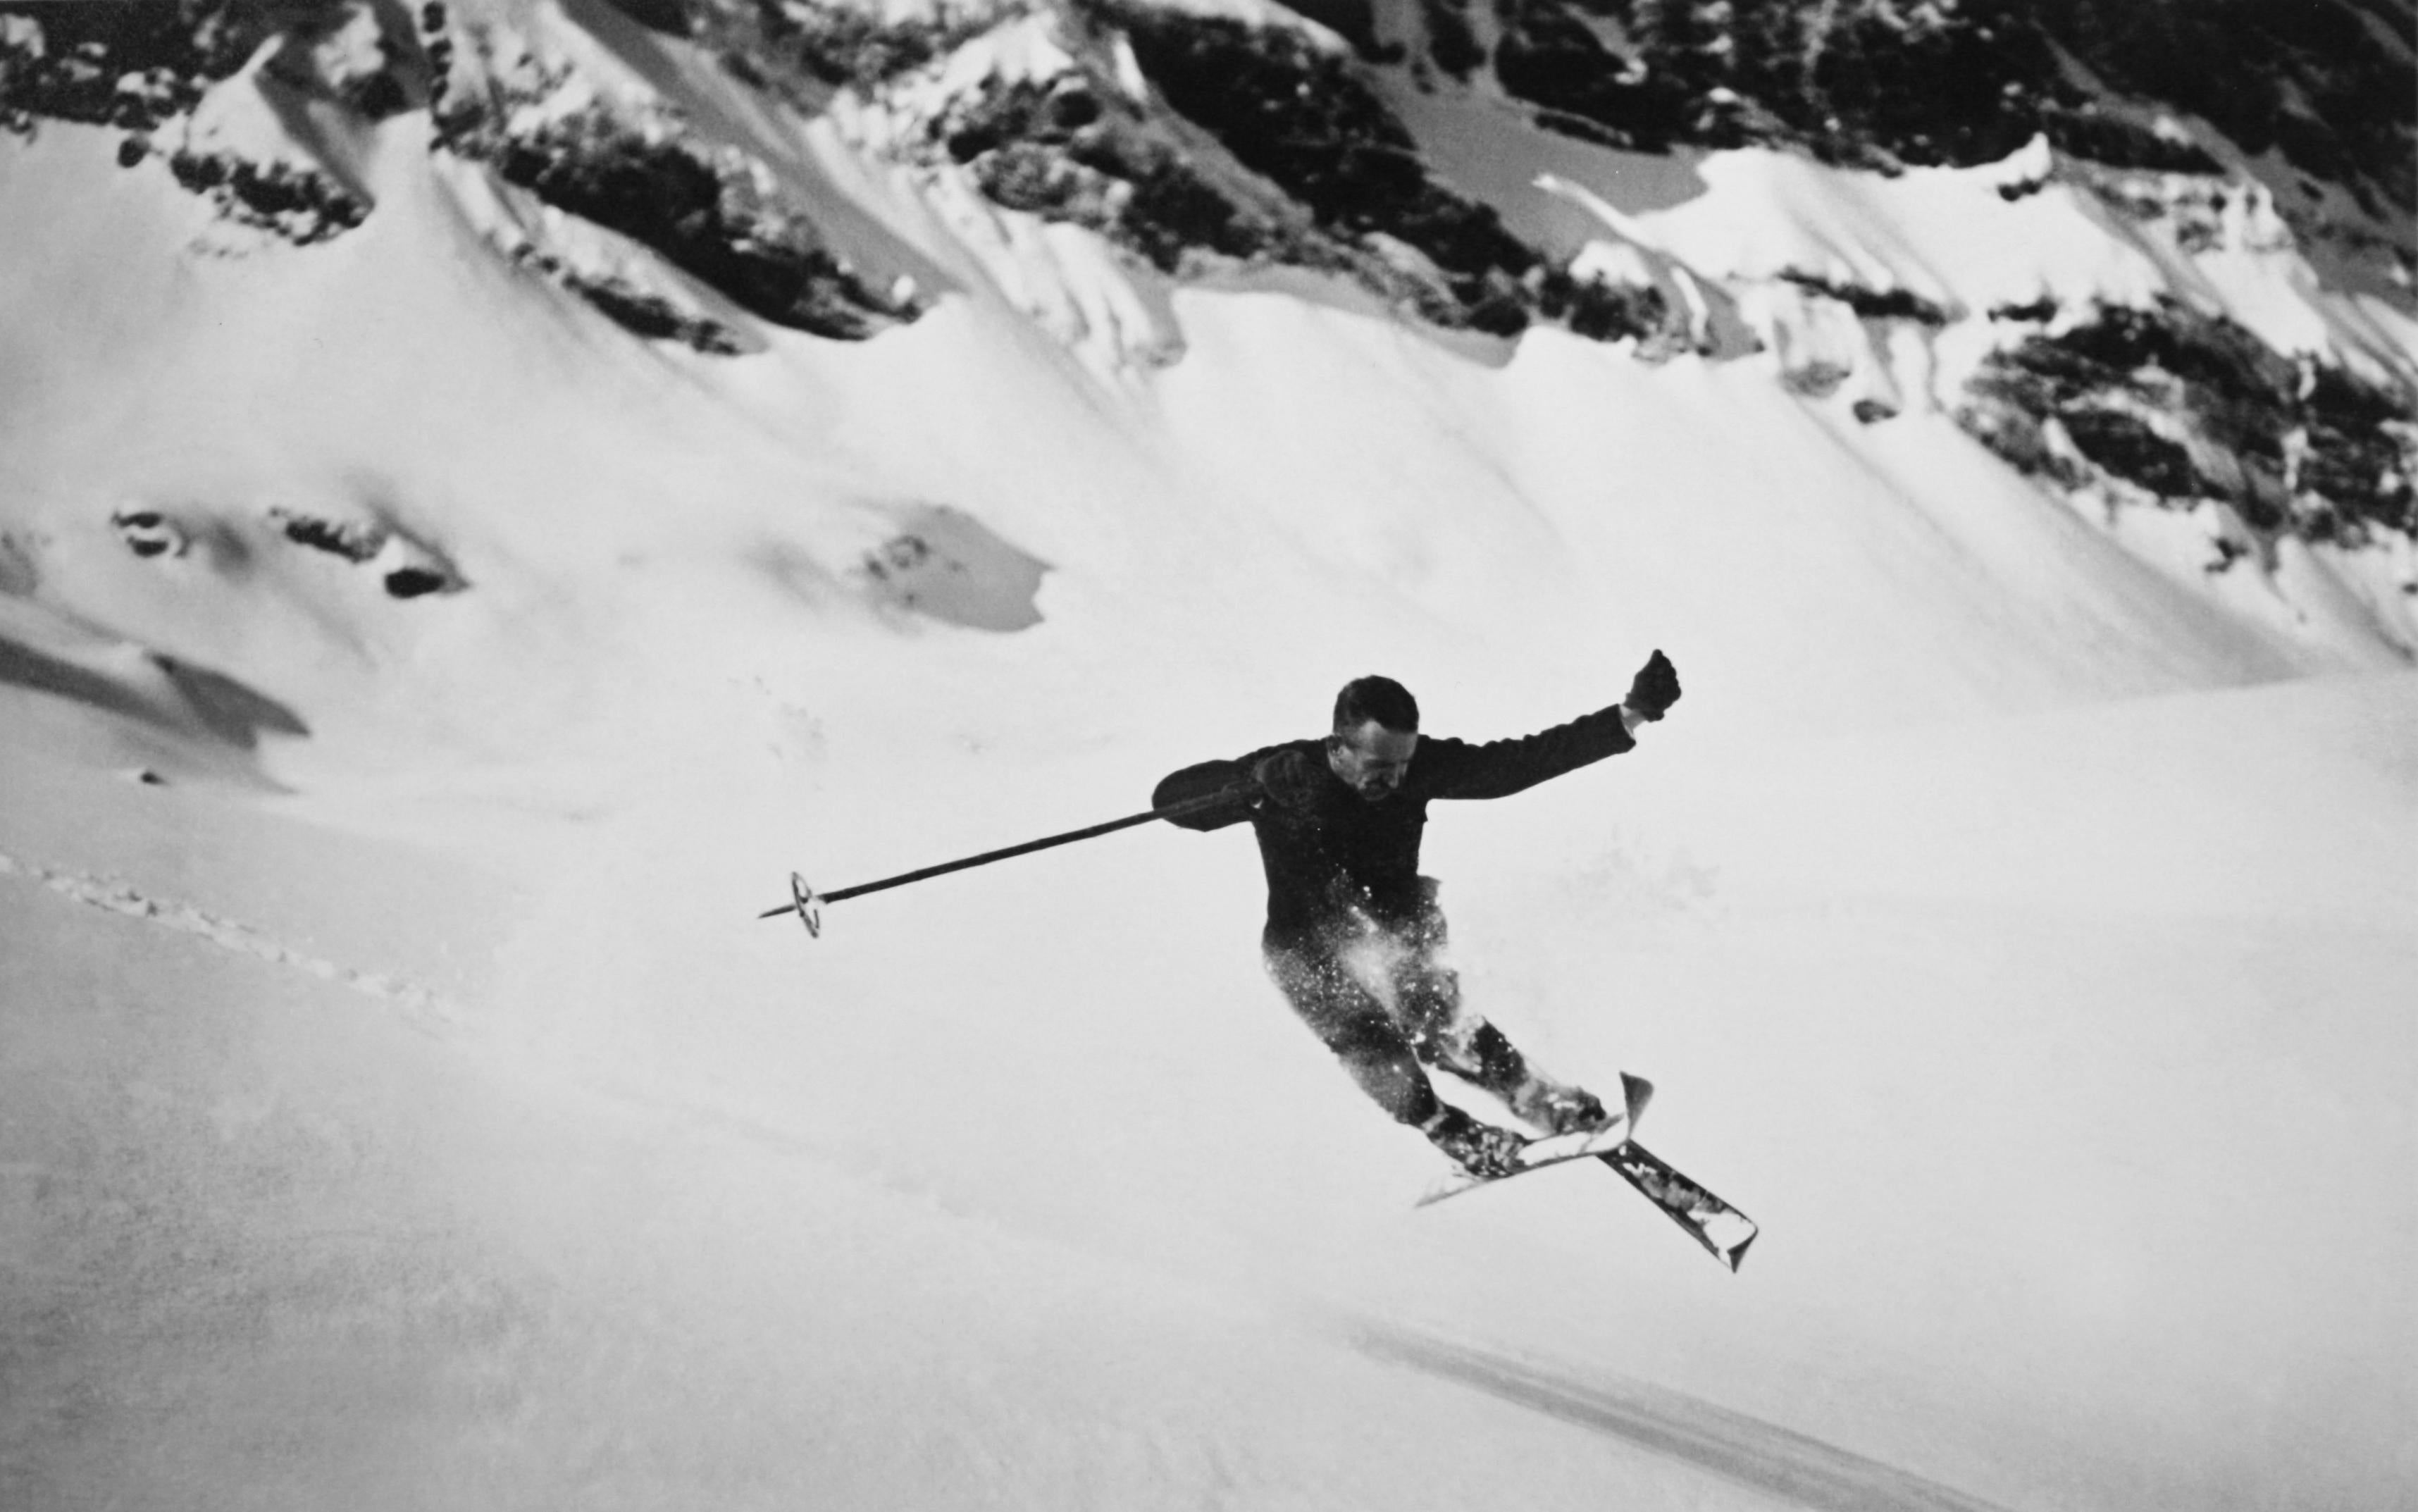 Foto: Ski Alpin.
qUERSPRUNG